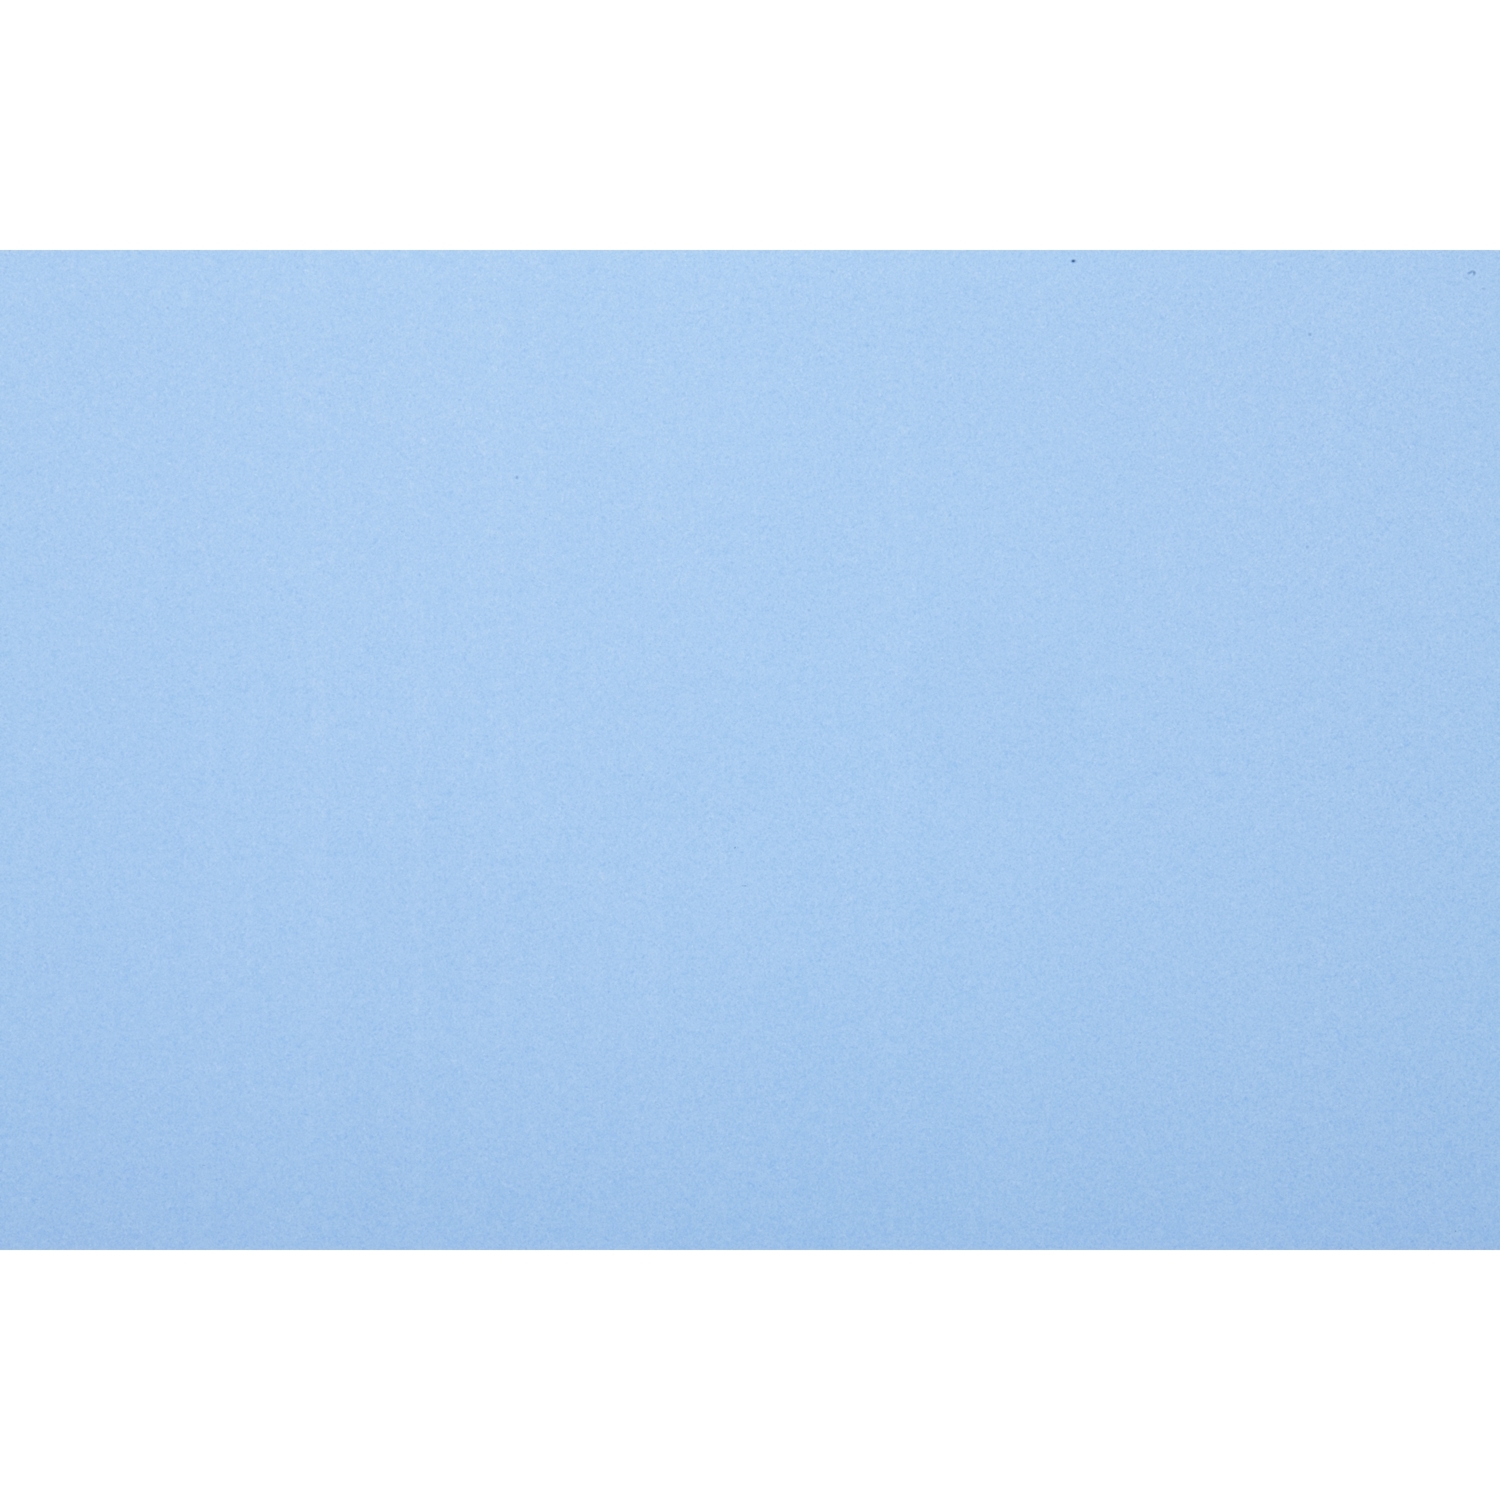 Slater Harrison Colourcard - Sky Blue Image